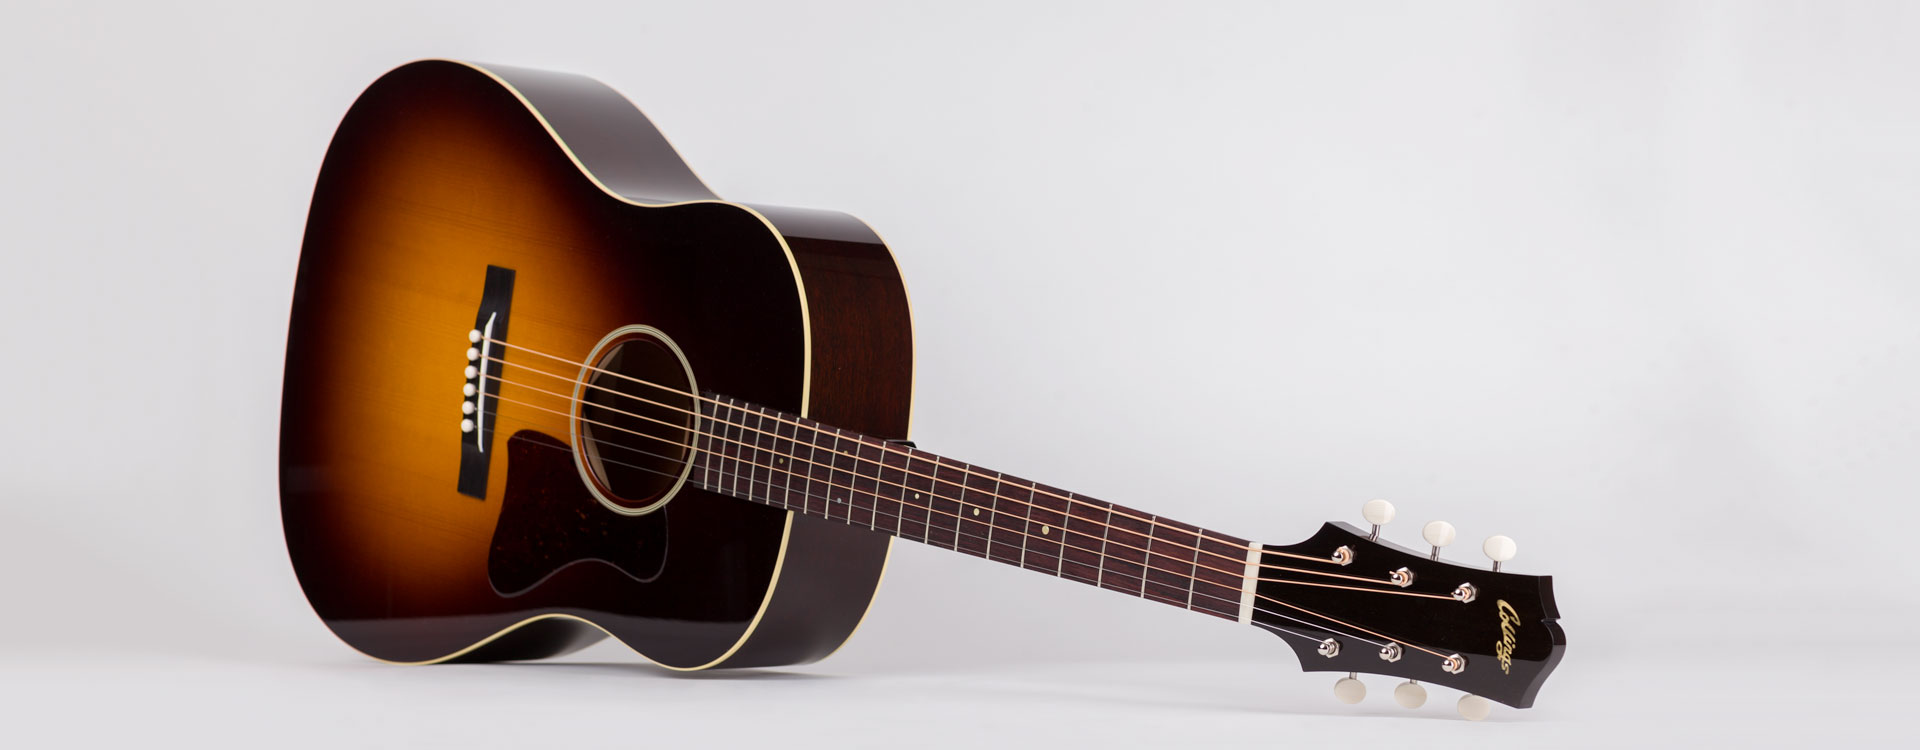 Detail Images Of Acoustic Guitar Nomer 42